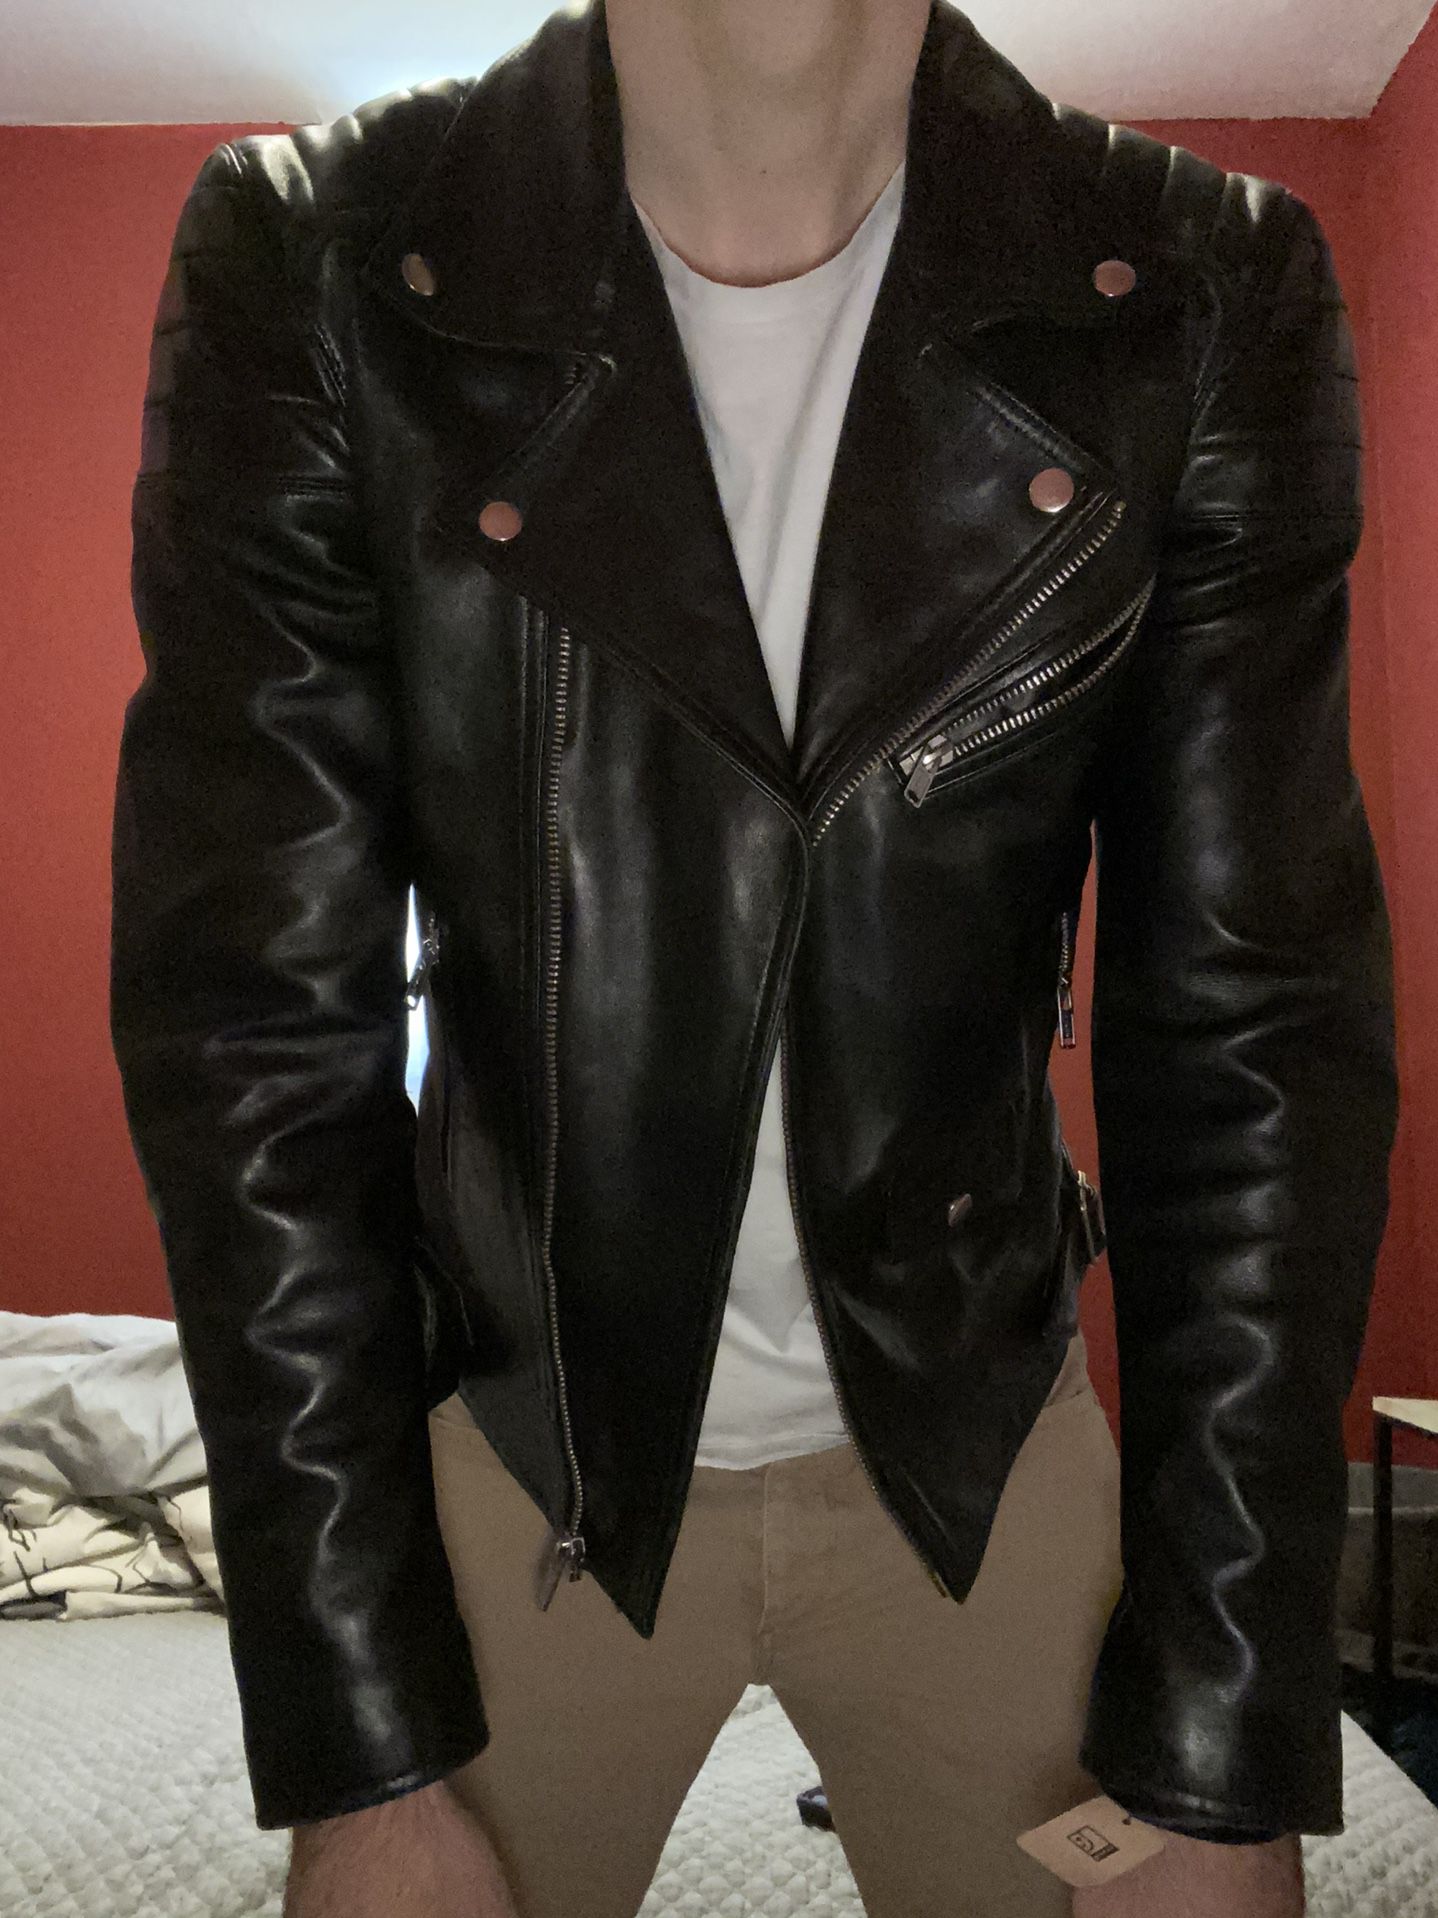 BLK leather jacket